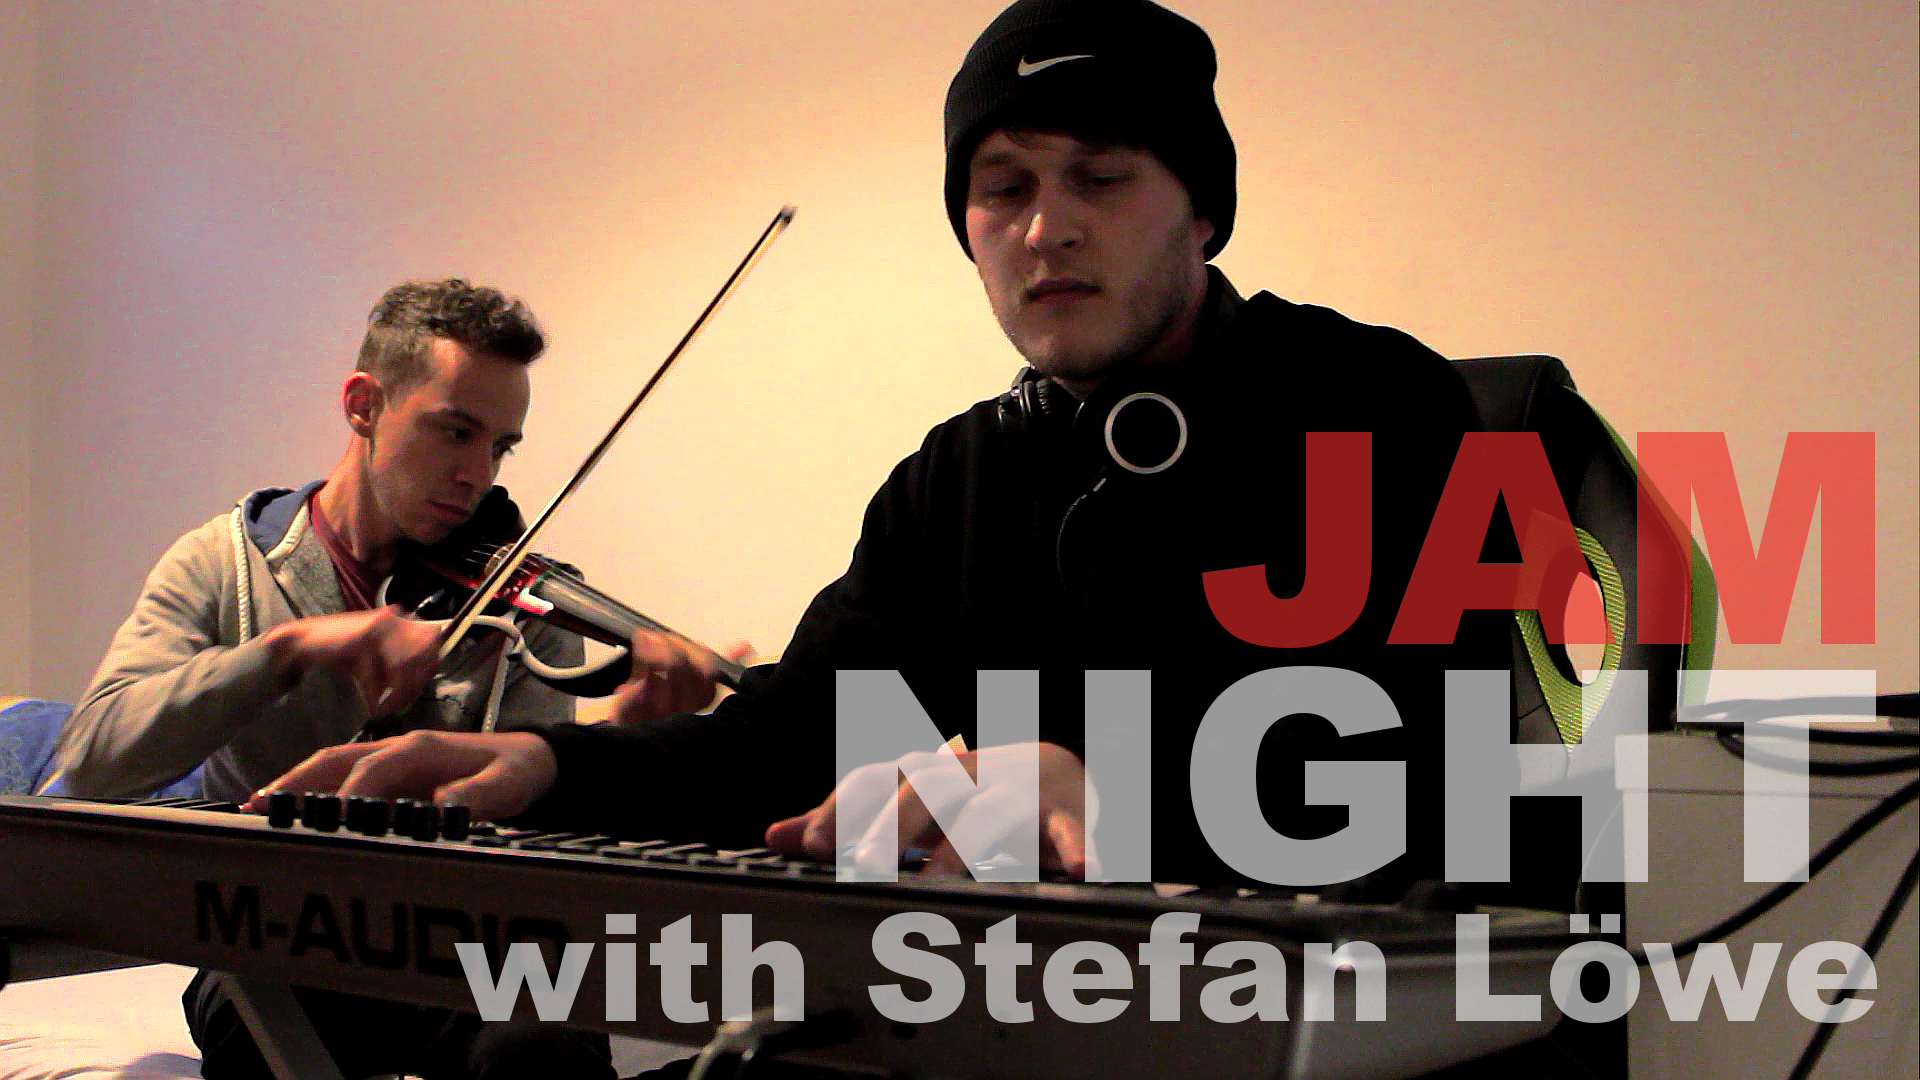 Kevin Meißner and Stefan Löwe Jam Night YouTube Video Thumbnail